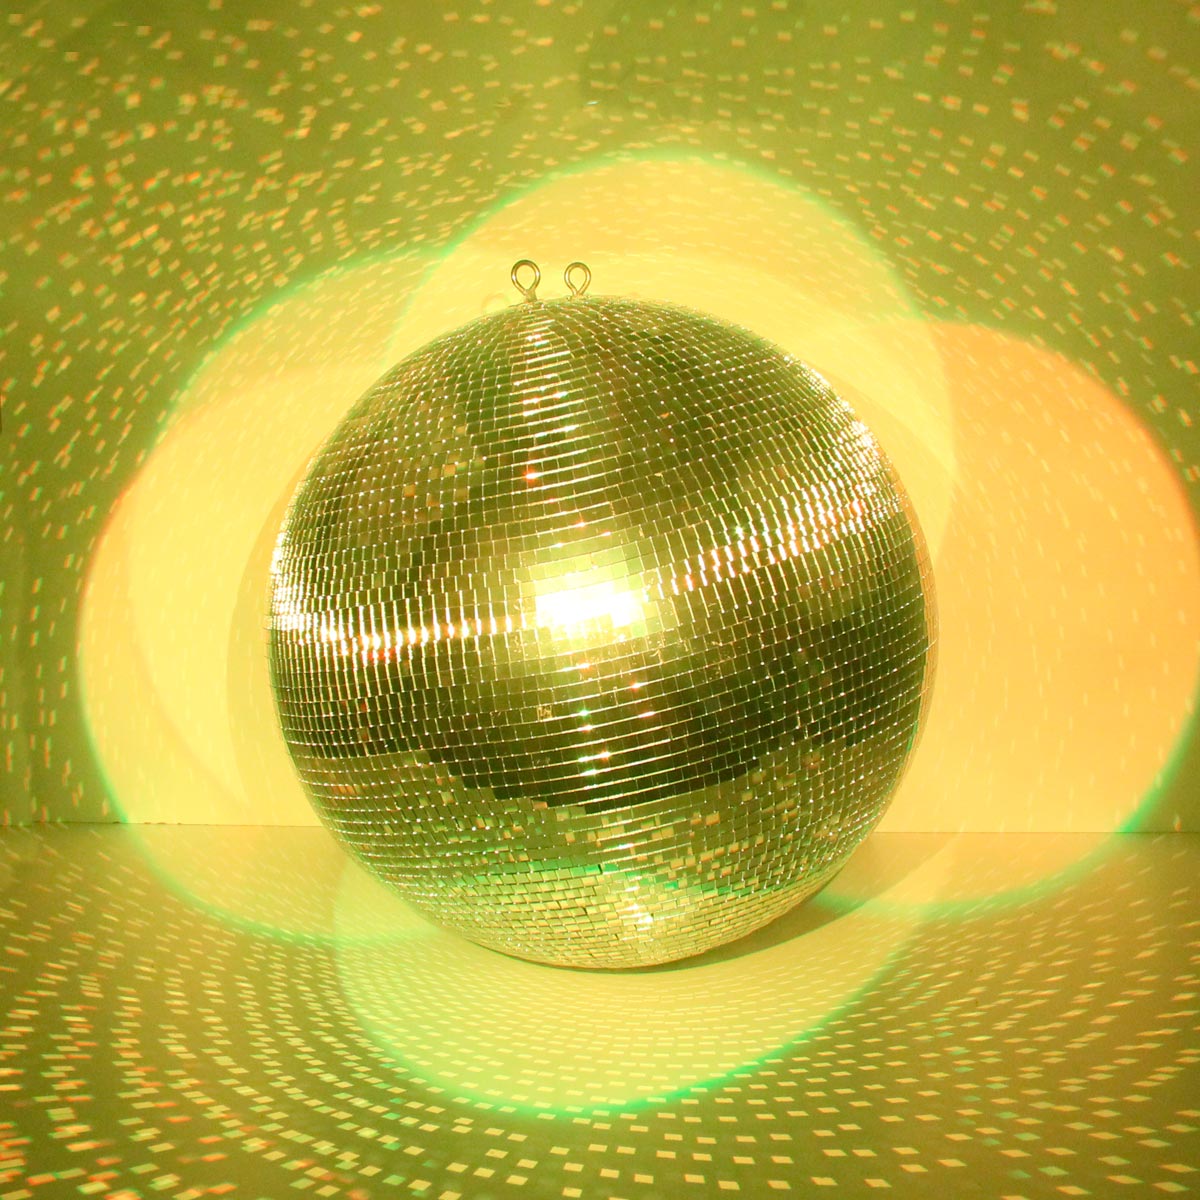 Spiegelkugel 50cm silber chrom- Diskokugel (Discokugel) Party Lichteffekt - Echtglas - mirrorball safety chrome color